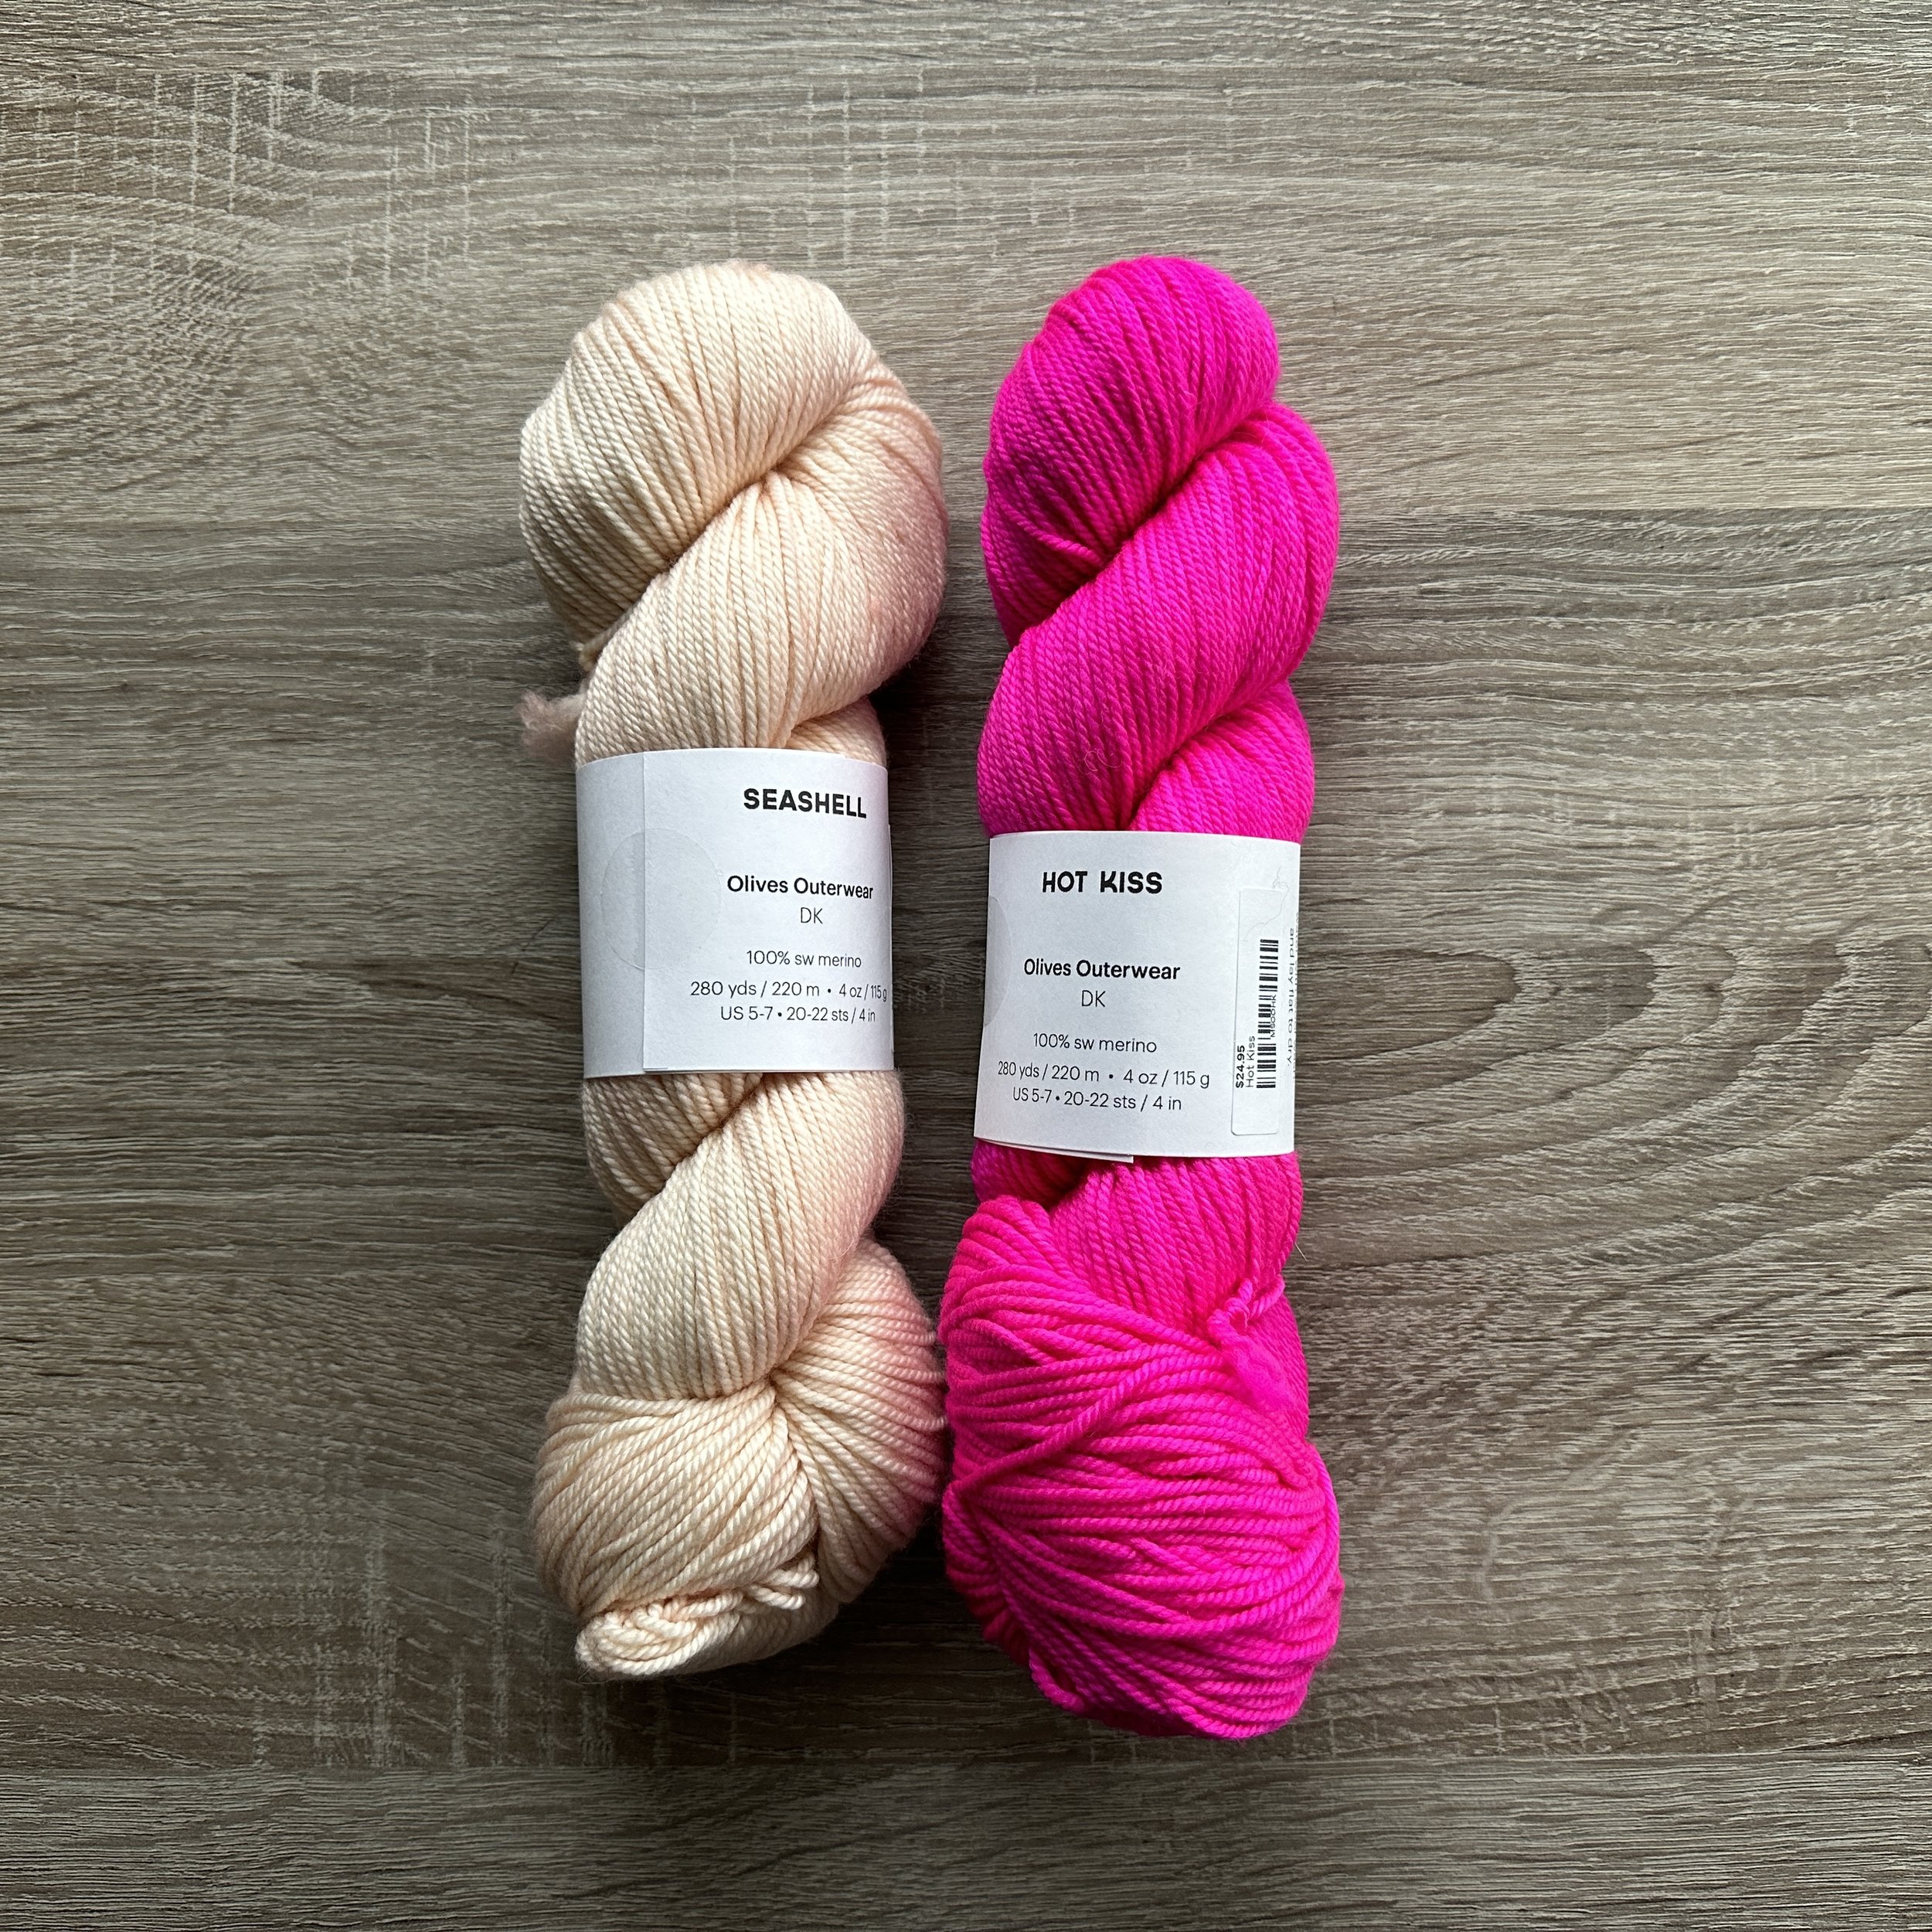 Texas Longhorns Medium, Light yarn color matches